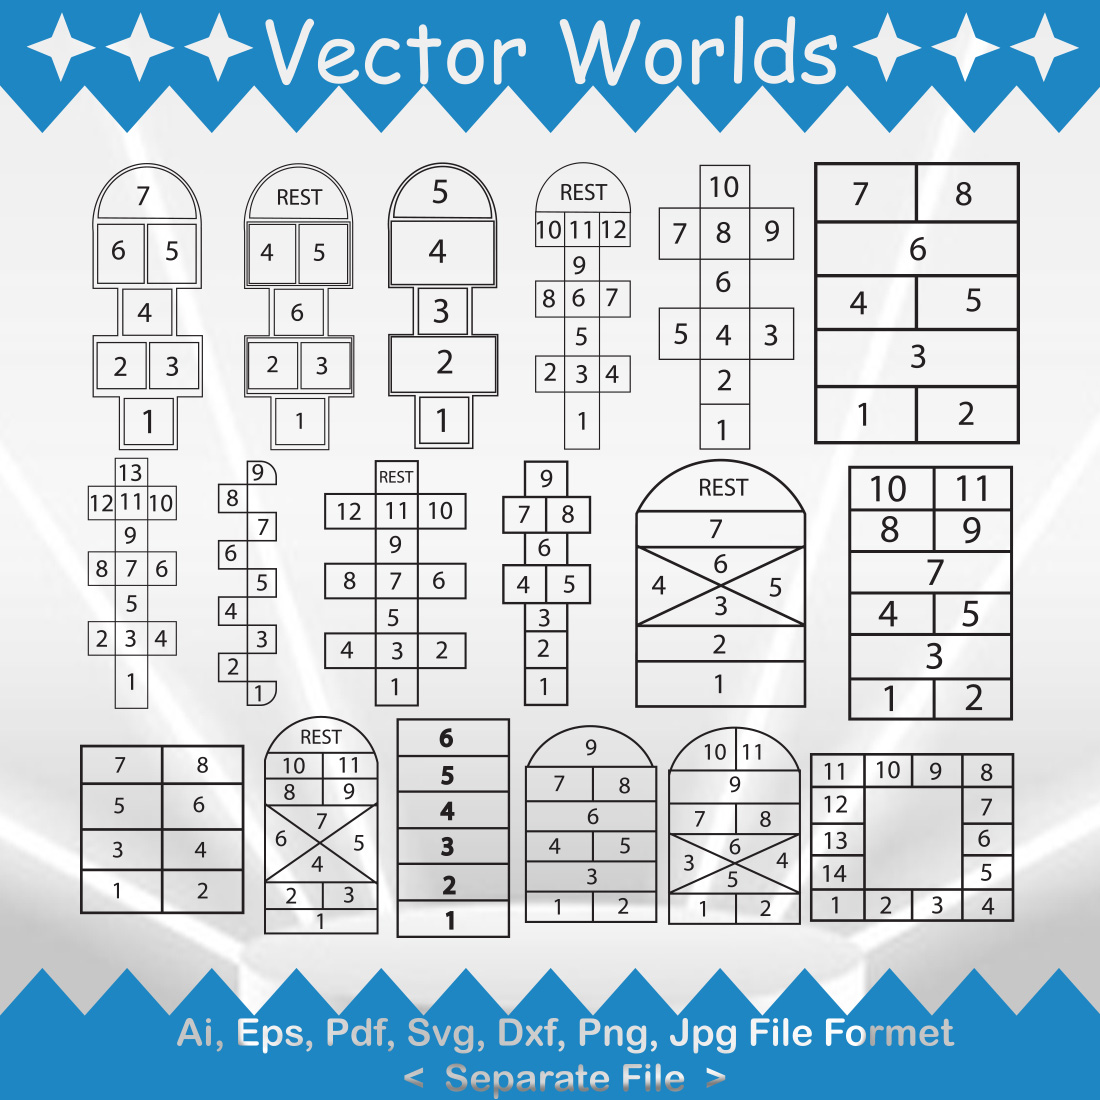 Hopscotch SVG Vector Design cover image.